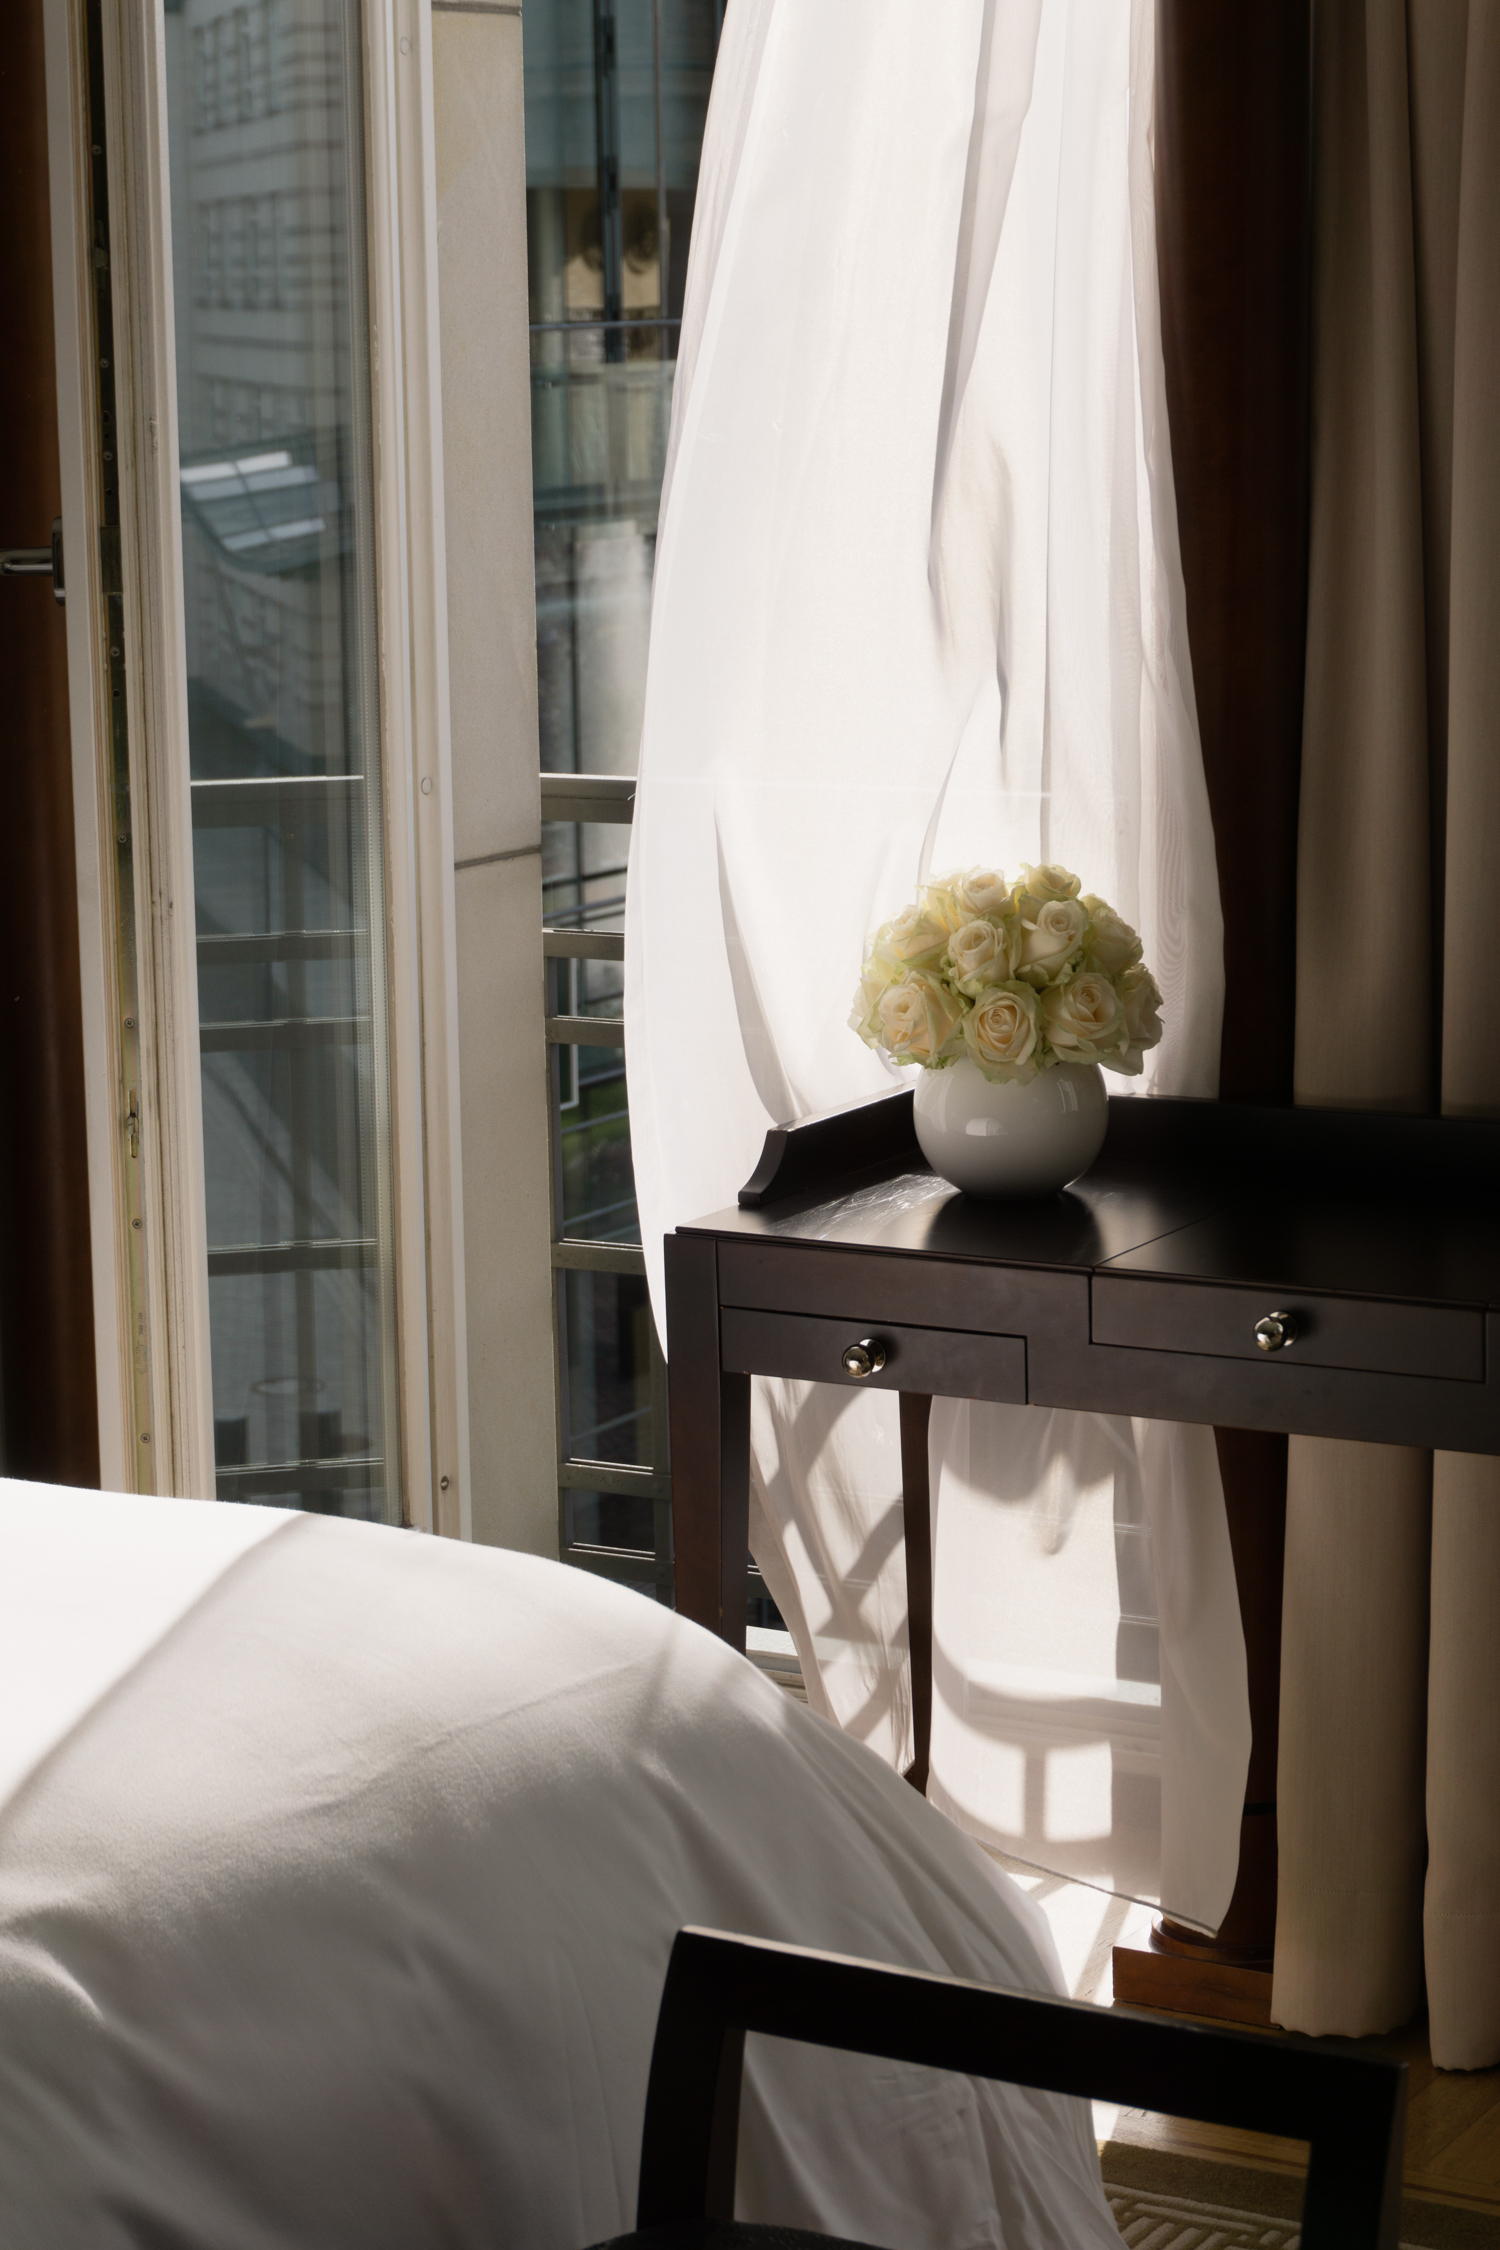 Hotel Adlon Kempinski | Room Interior Design | Luxury 5 Star Hotels | Berlin Weekend Travel Guide | RG Daily Blog